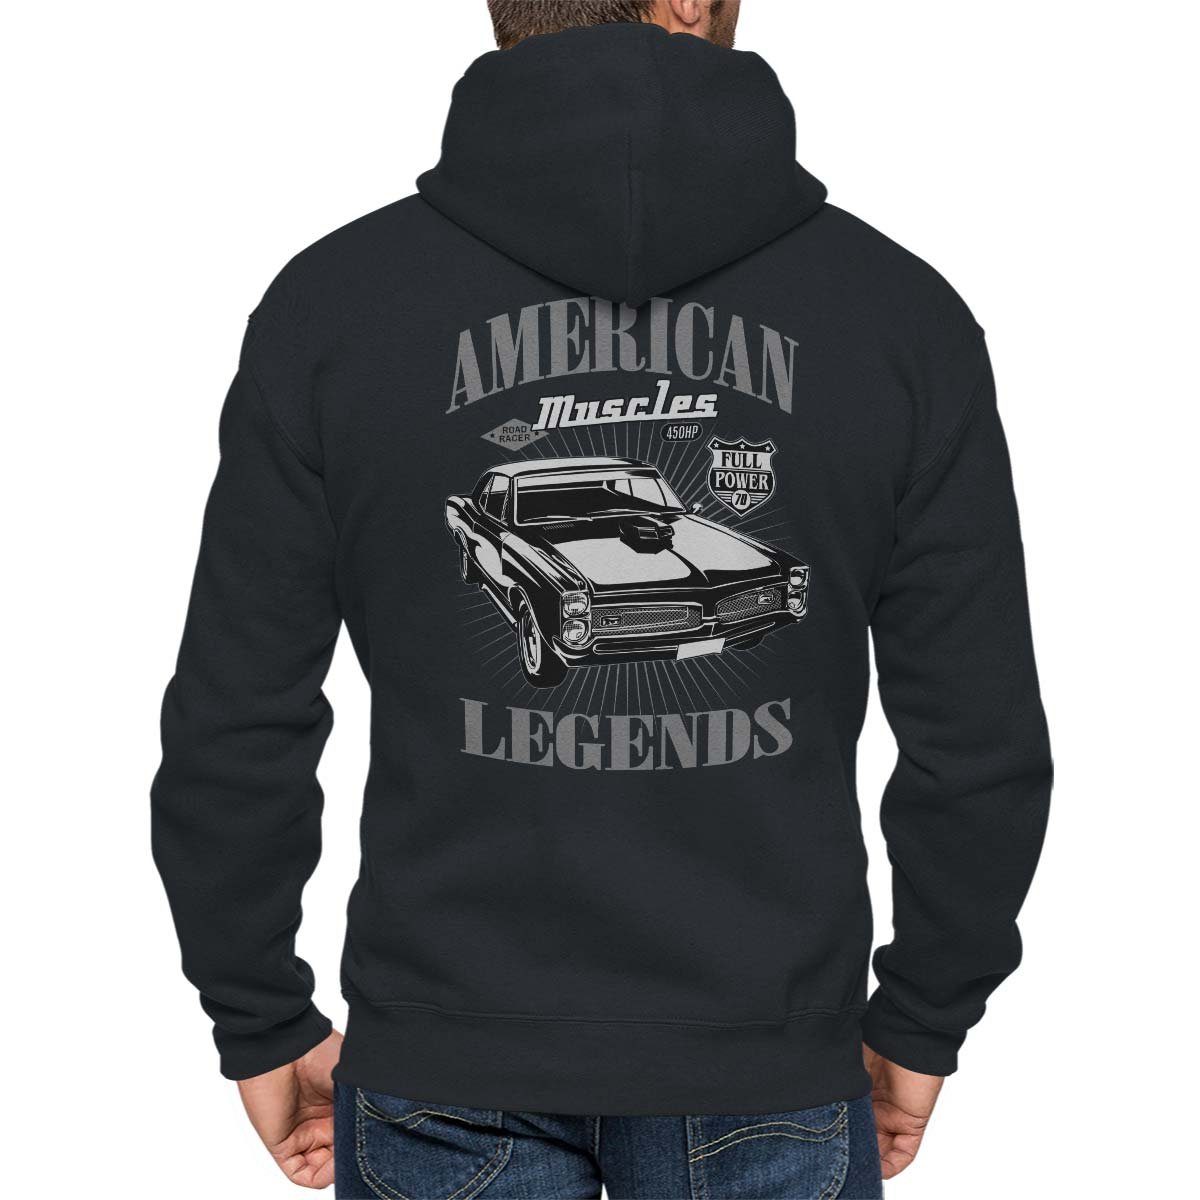 Rebel On Wheels Kapuzensweatjacke Kapuzenjacke Zip Hoodie American V8 Legends mit Auto / US-Car Motiv Schwarz